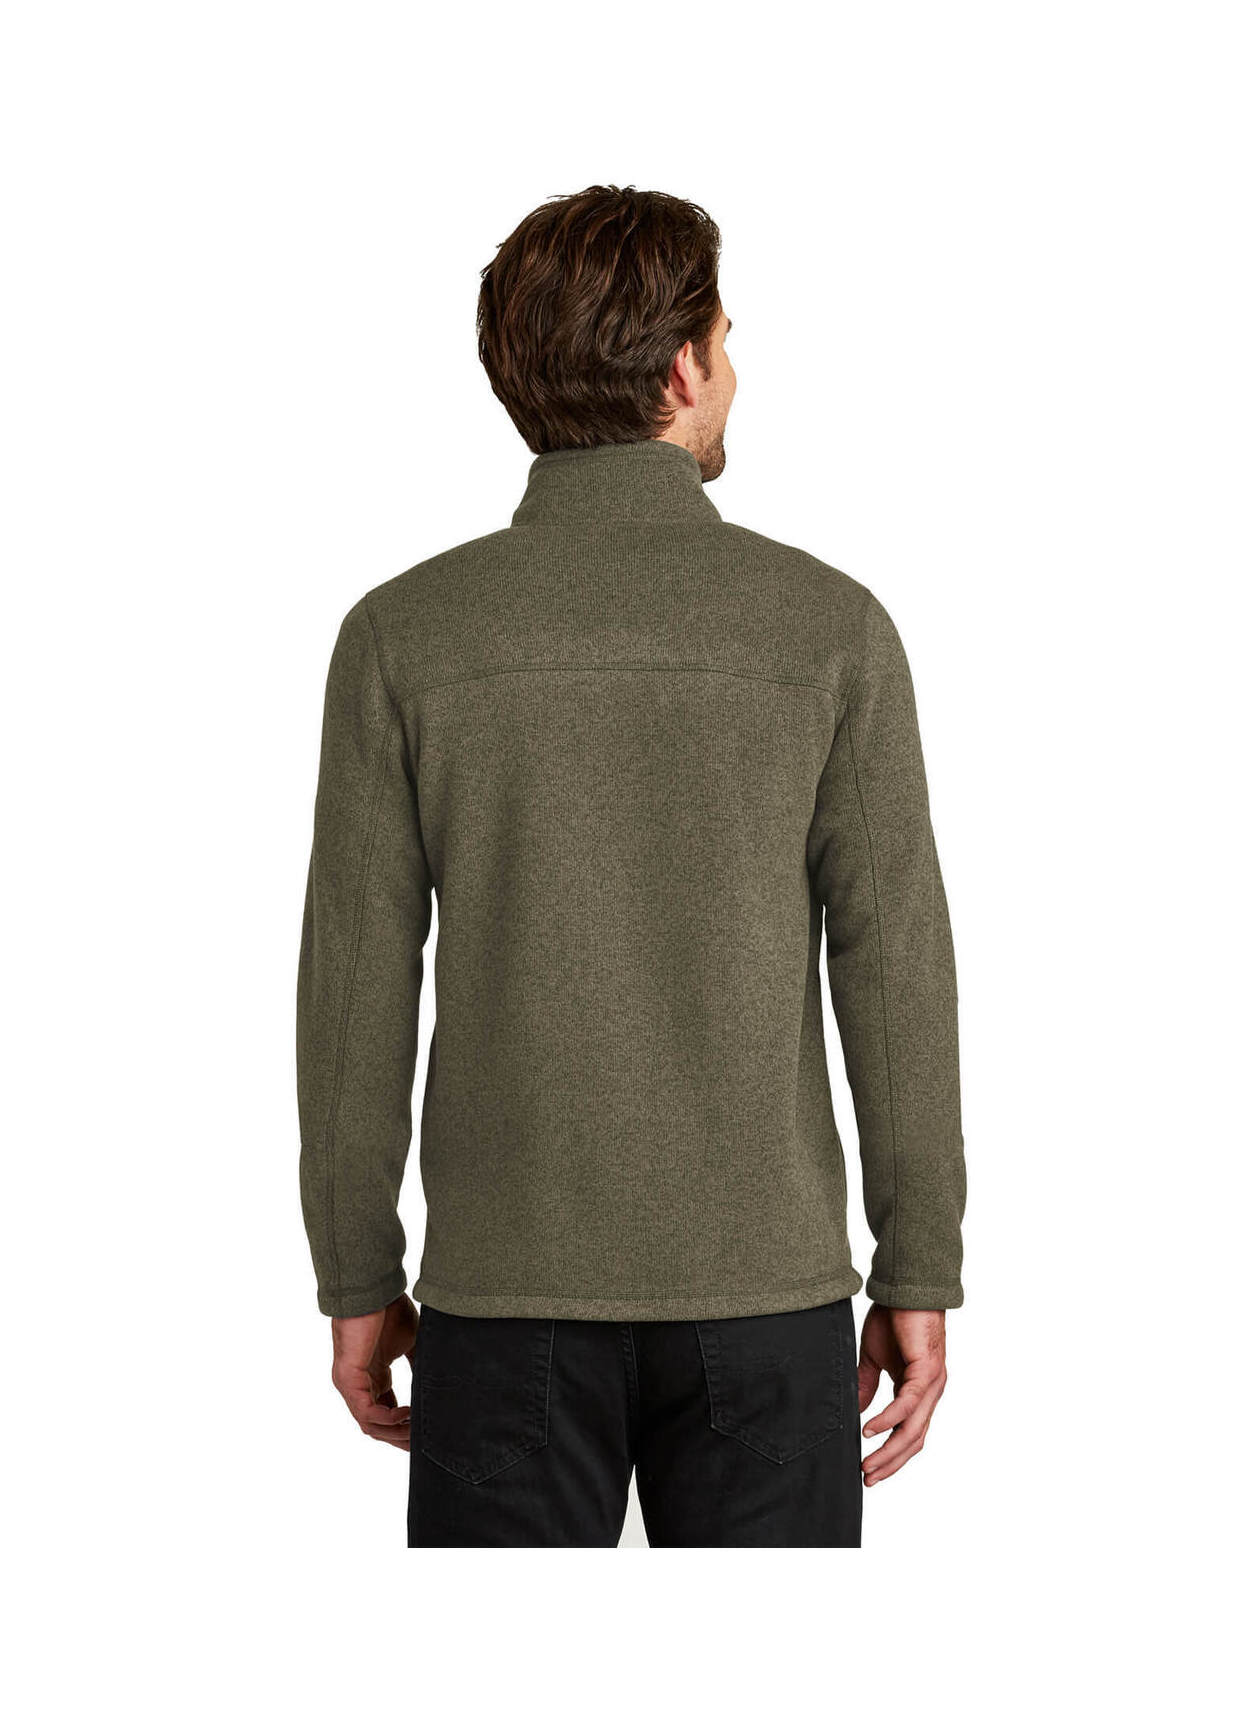 Men's The North Face Sweater Fleece Jacket